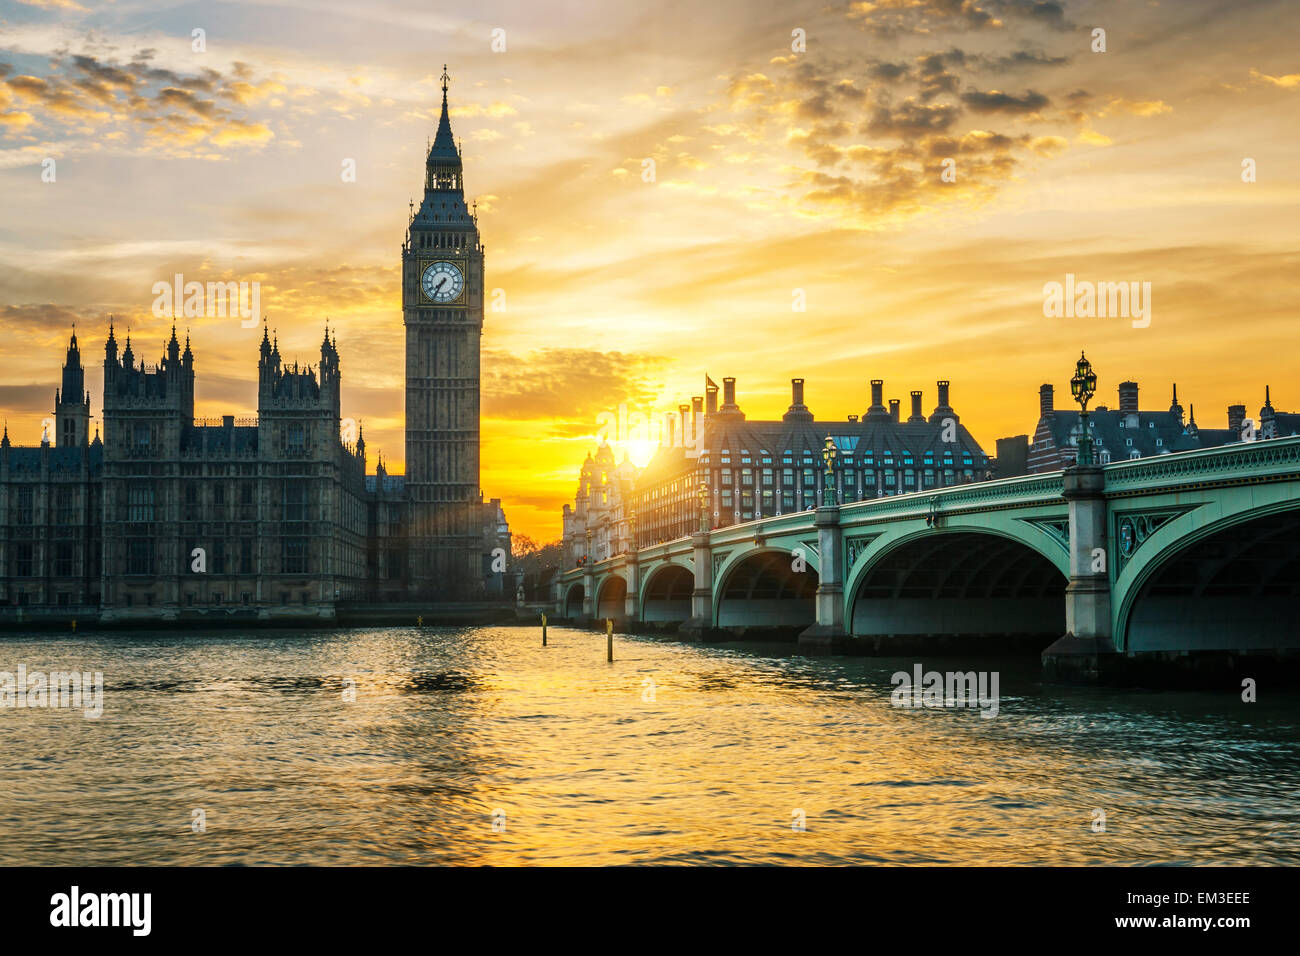 Berühmten Big Ben Clock Tower in London bei Sonnenuntergang, UK. Stockfoto